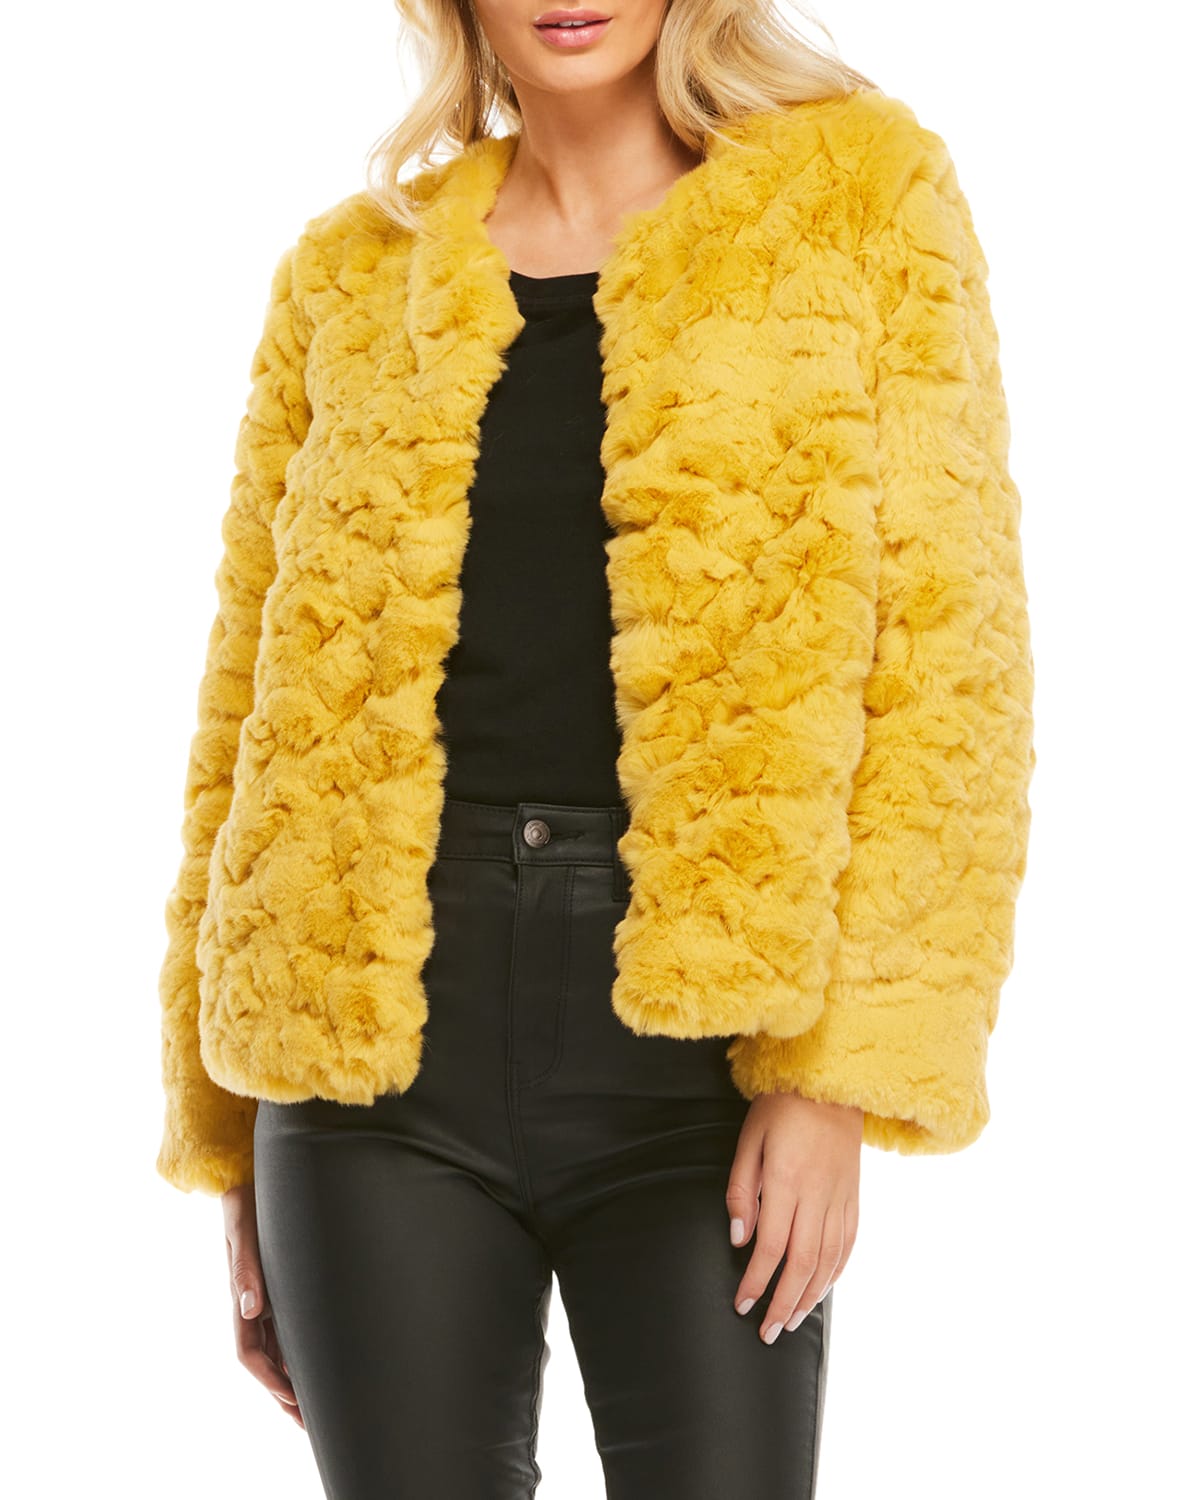 Fabulous Furs The Upside Jacket